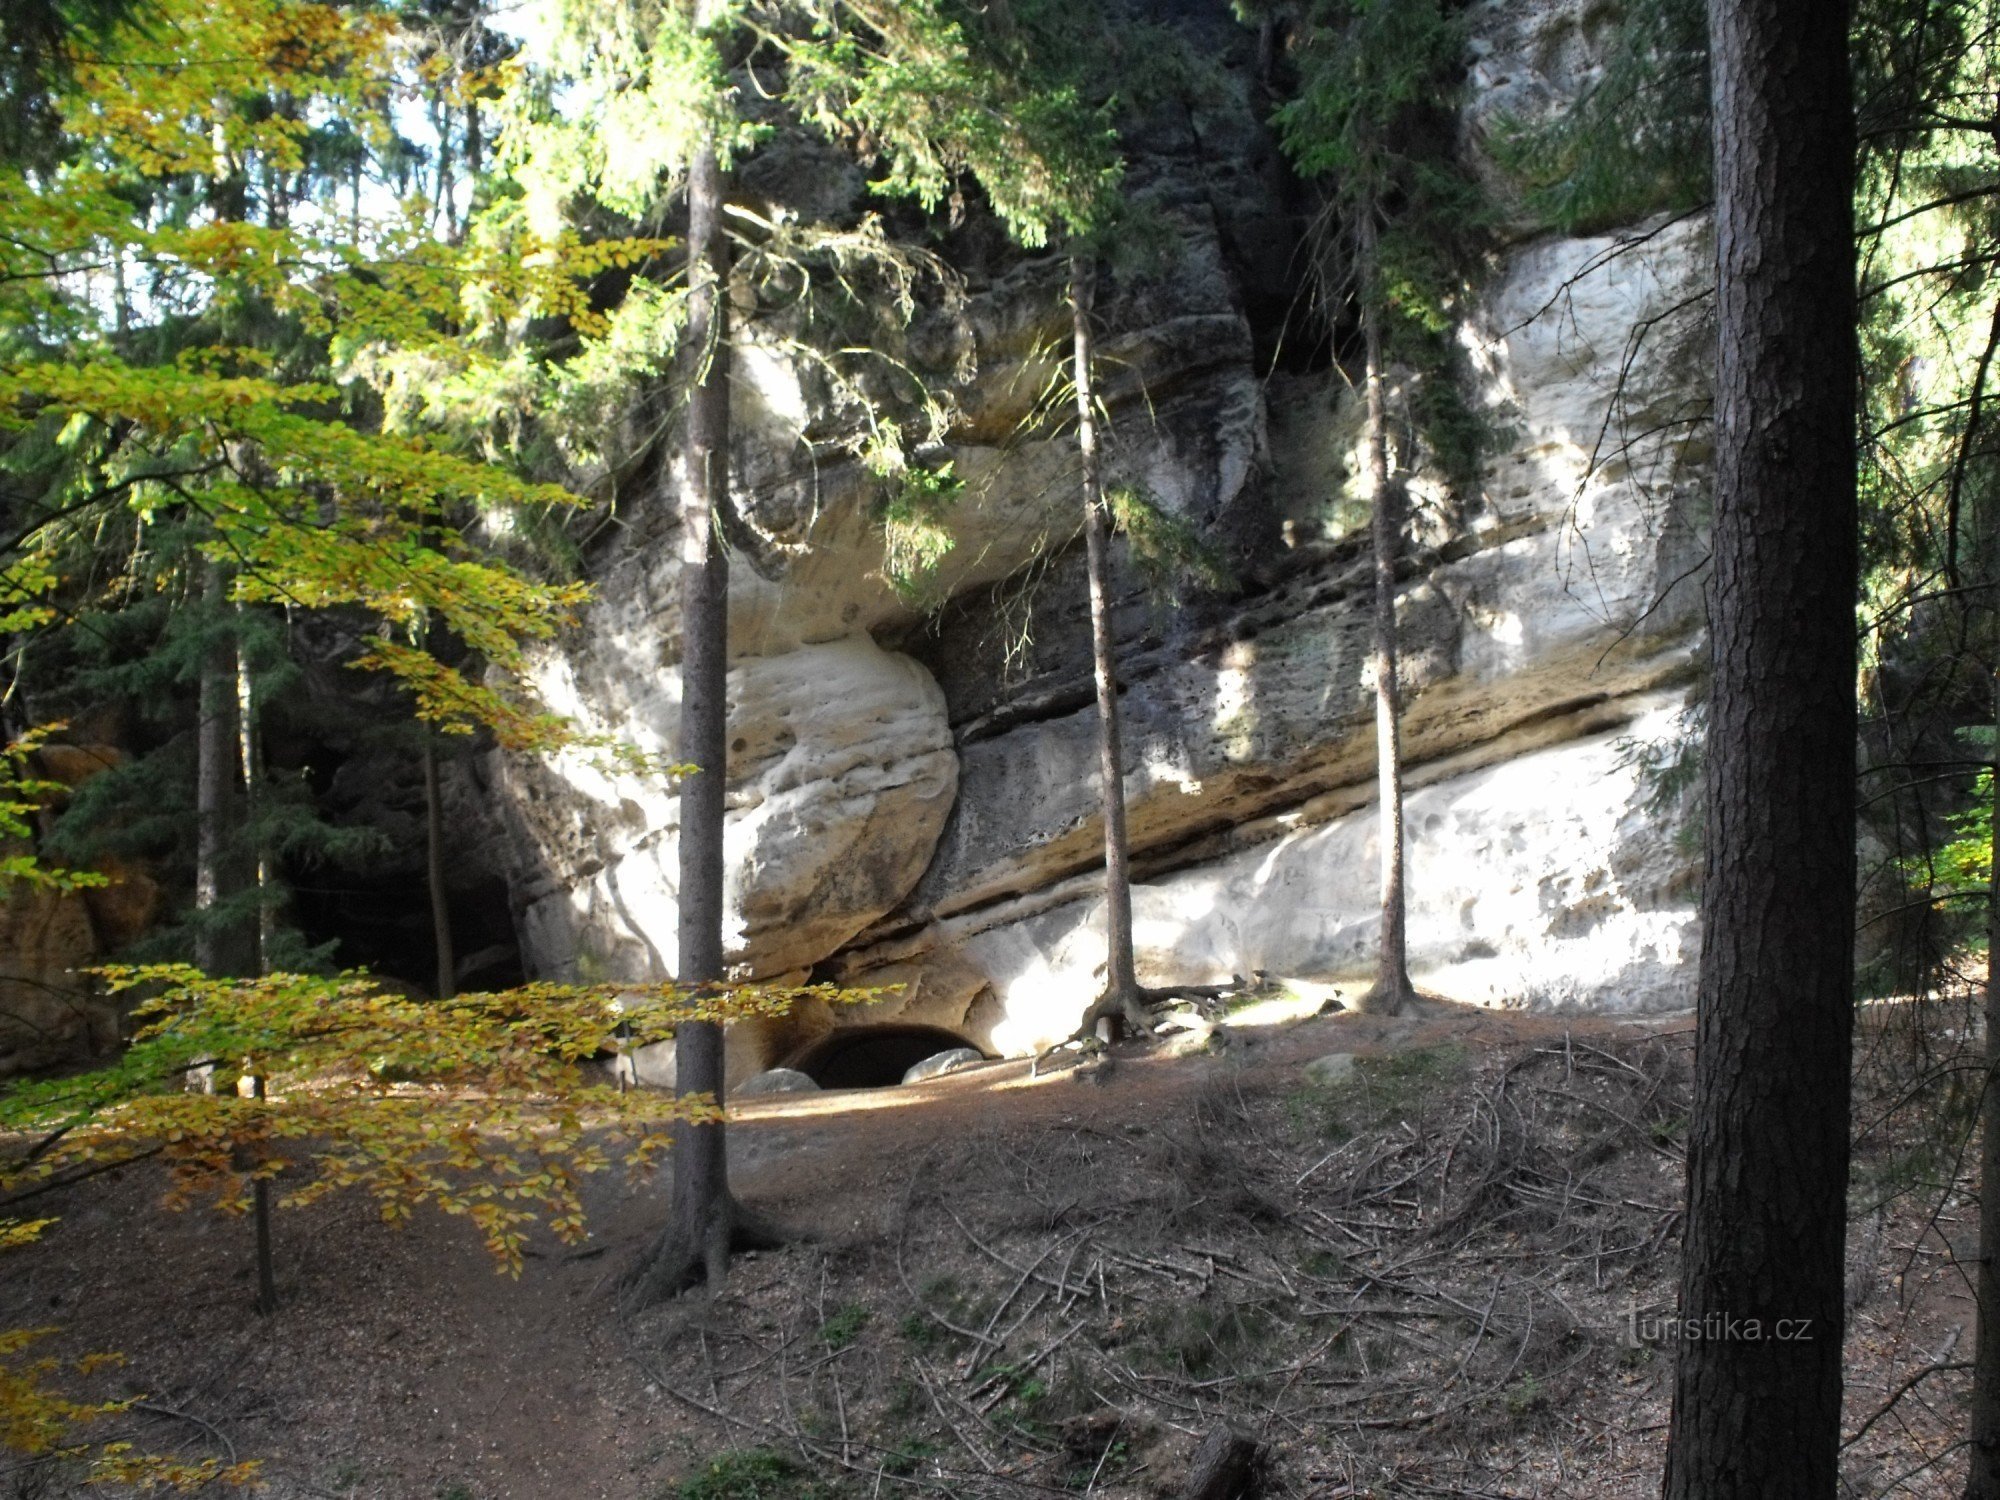 ingresso alla grotta